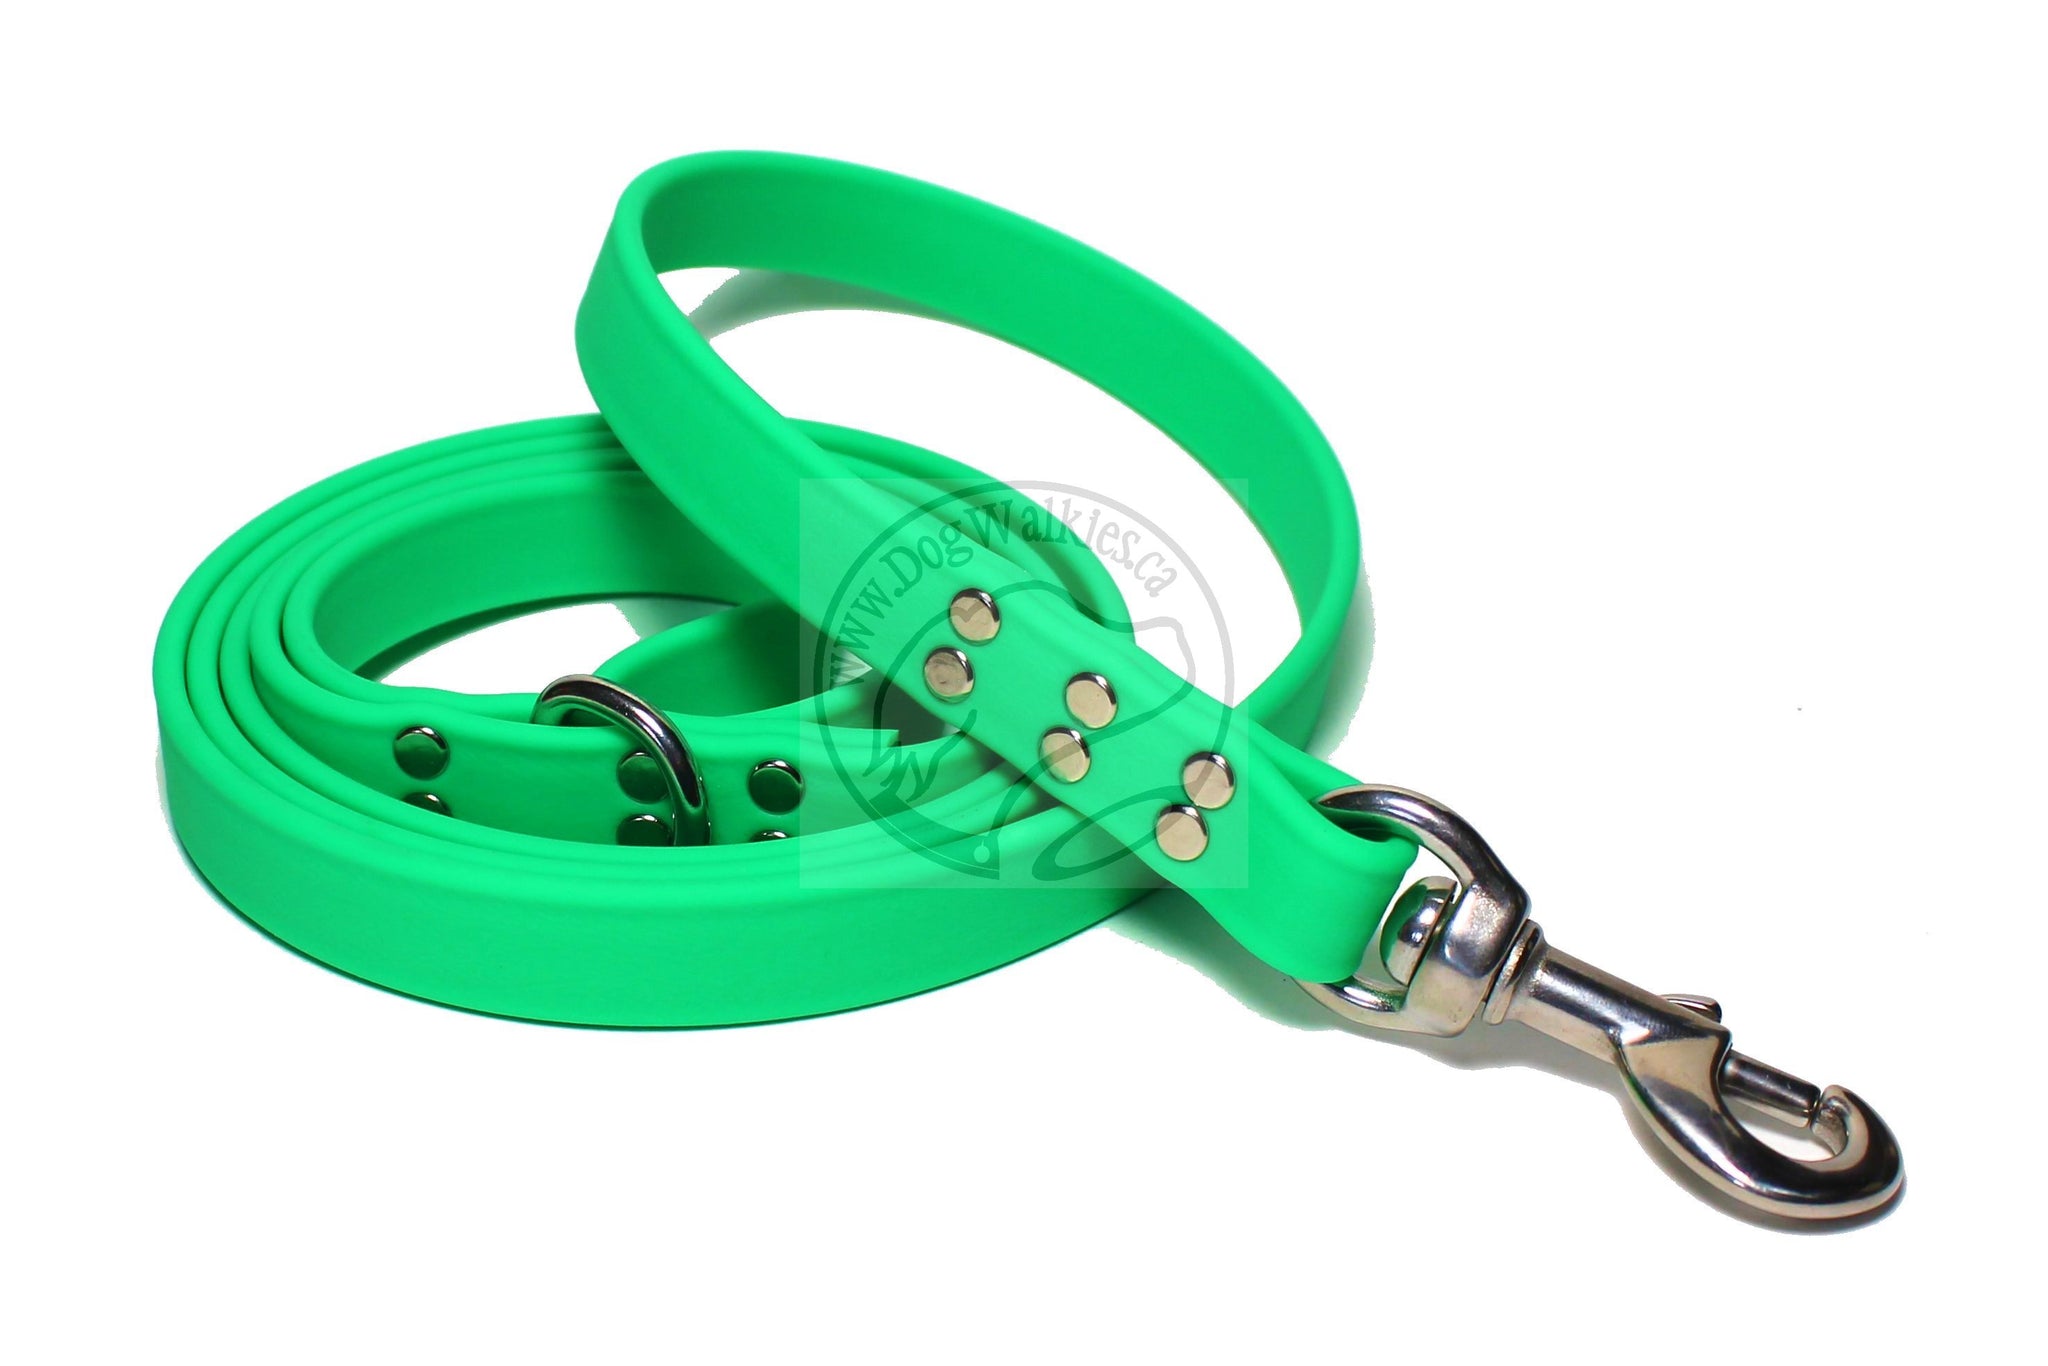 Neon Apple Green Biothane Large Dog Leash